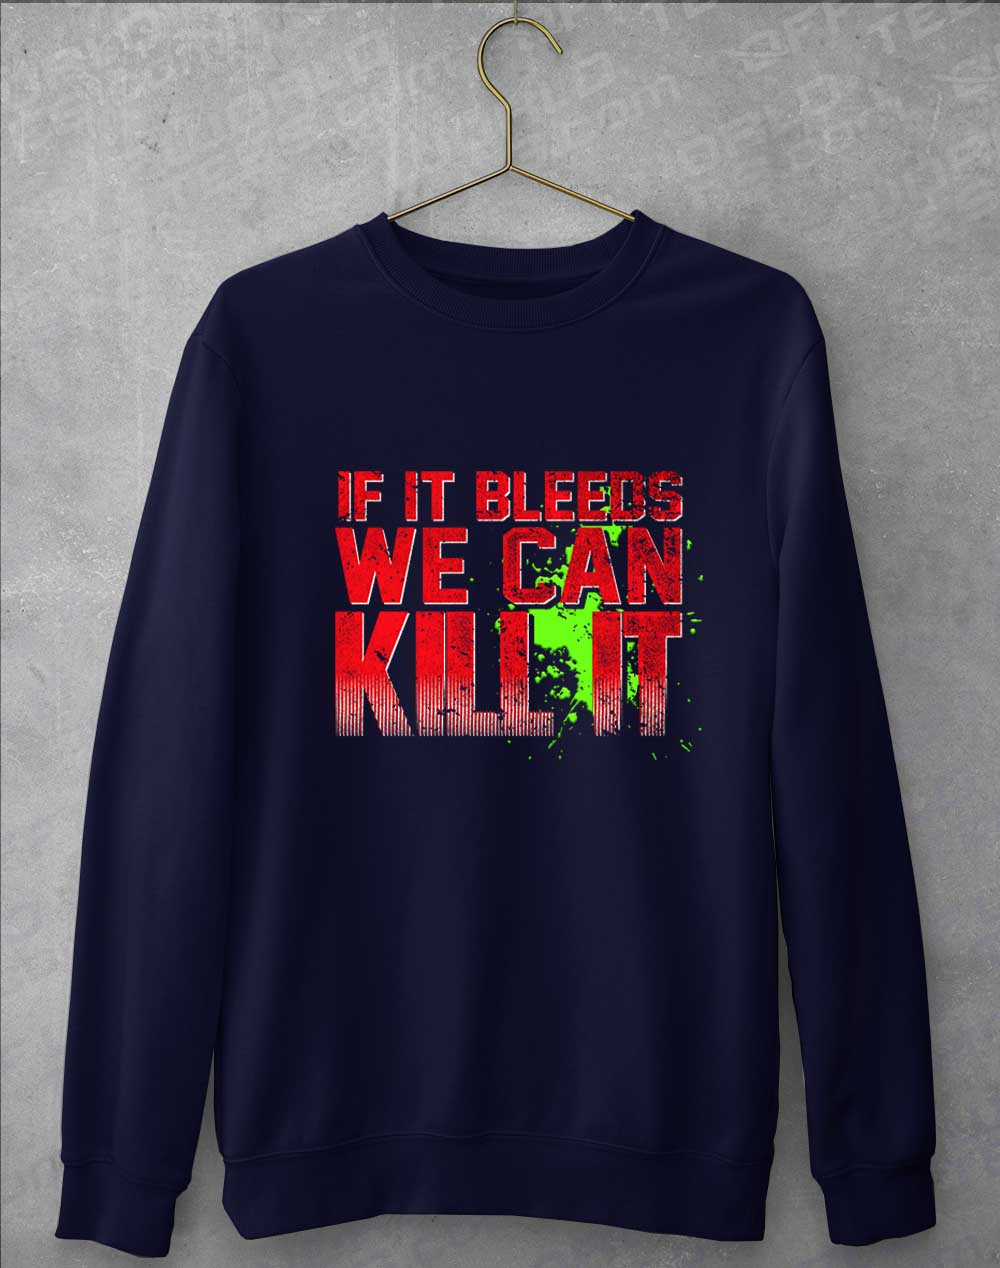 Oxford Navy - If It Bleeds We Can Kill It Sweatshirt